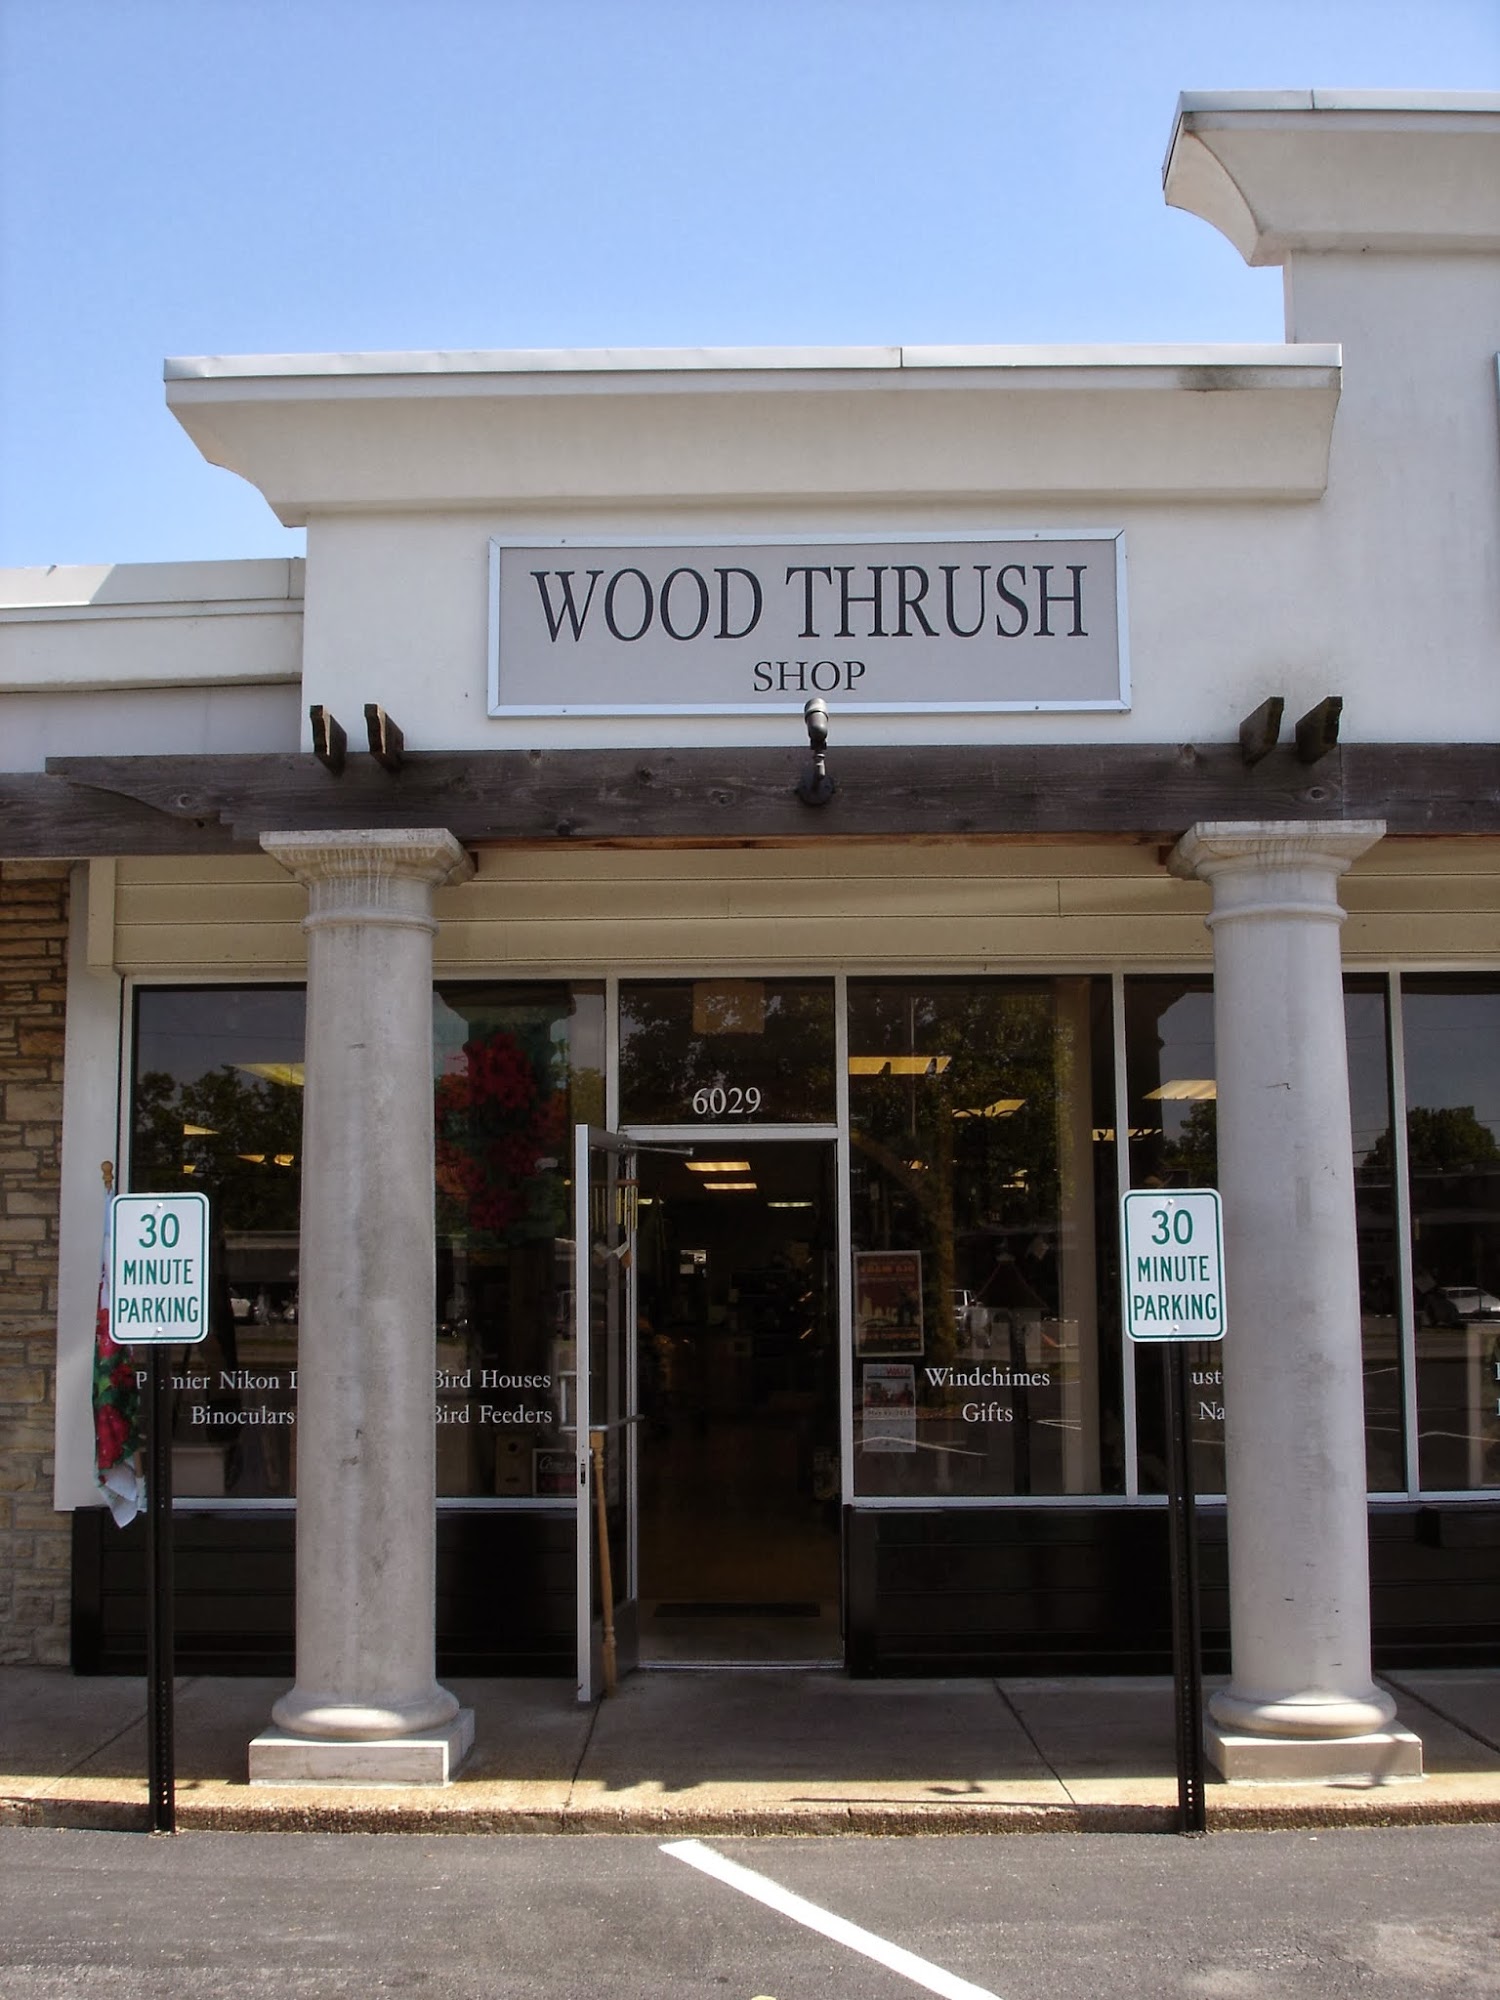 The Wood Thrush Shop